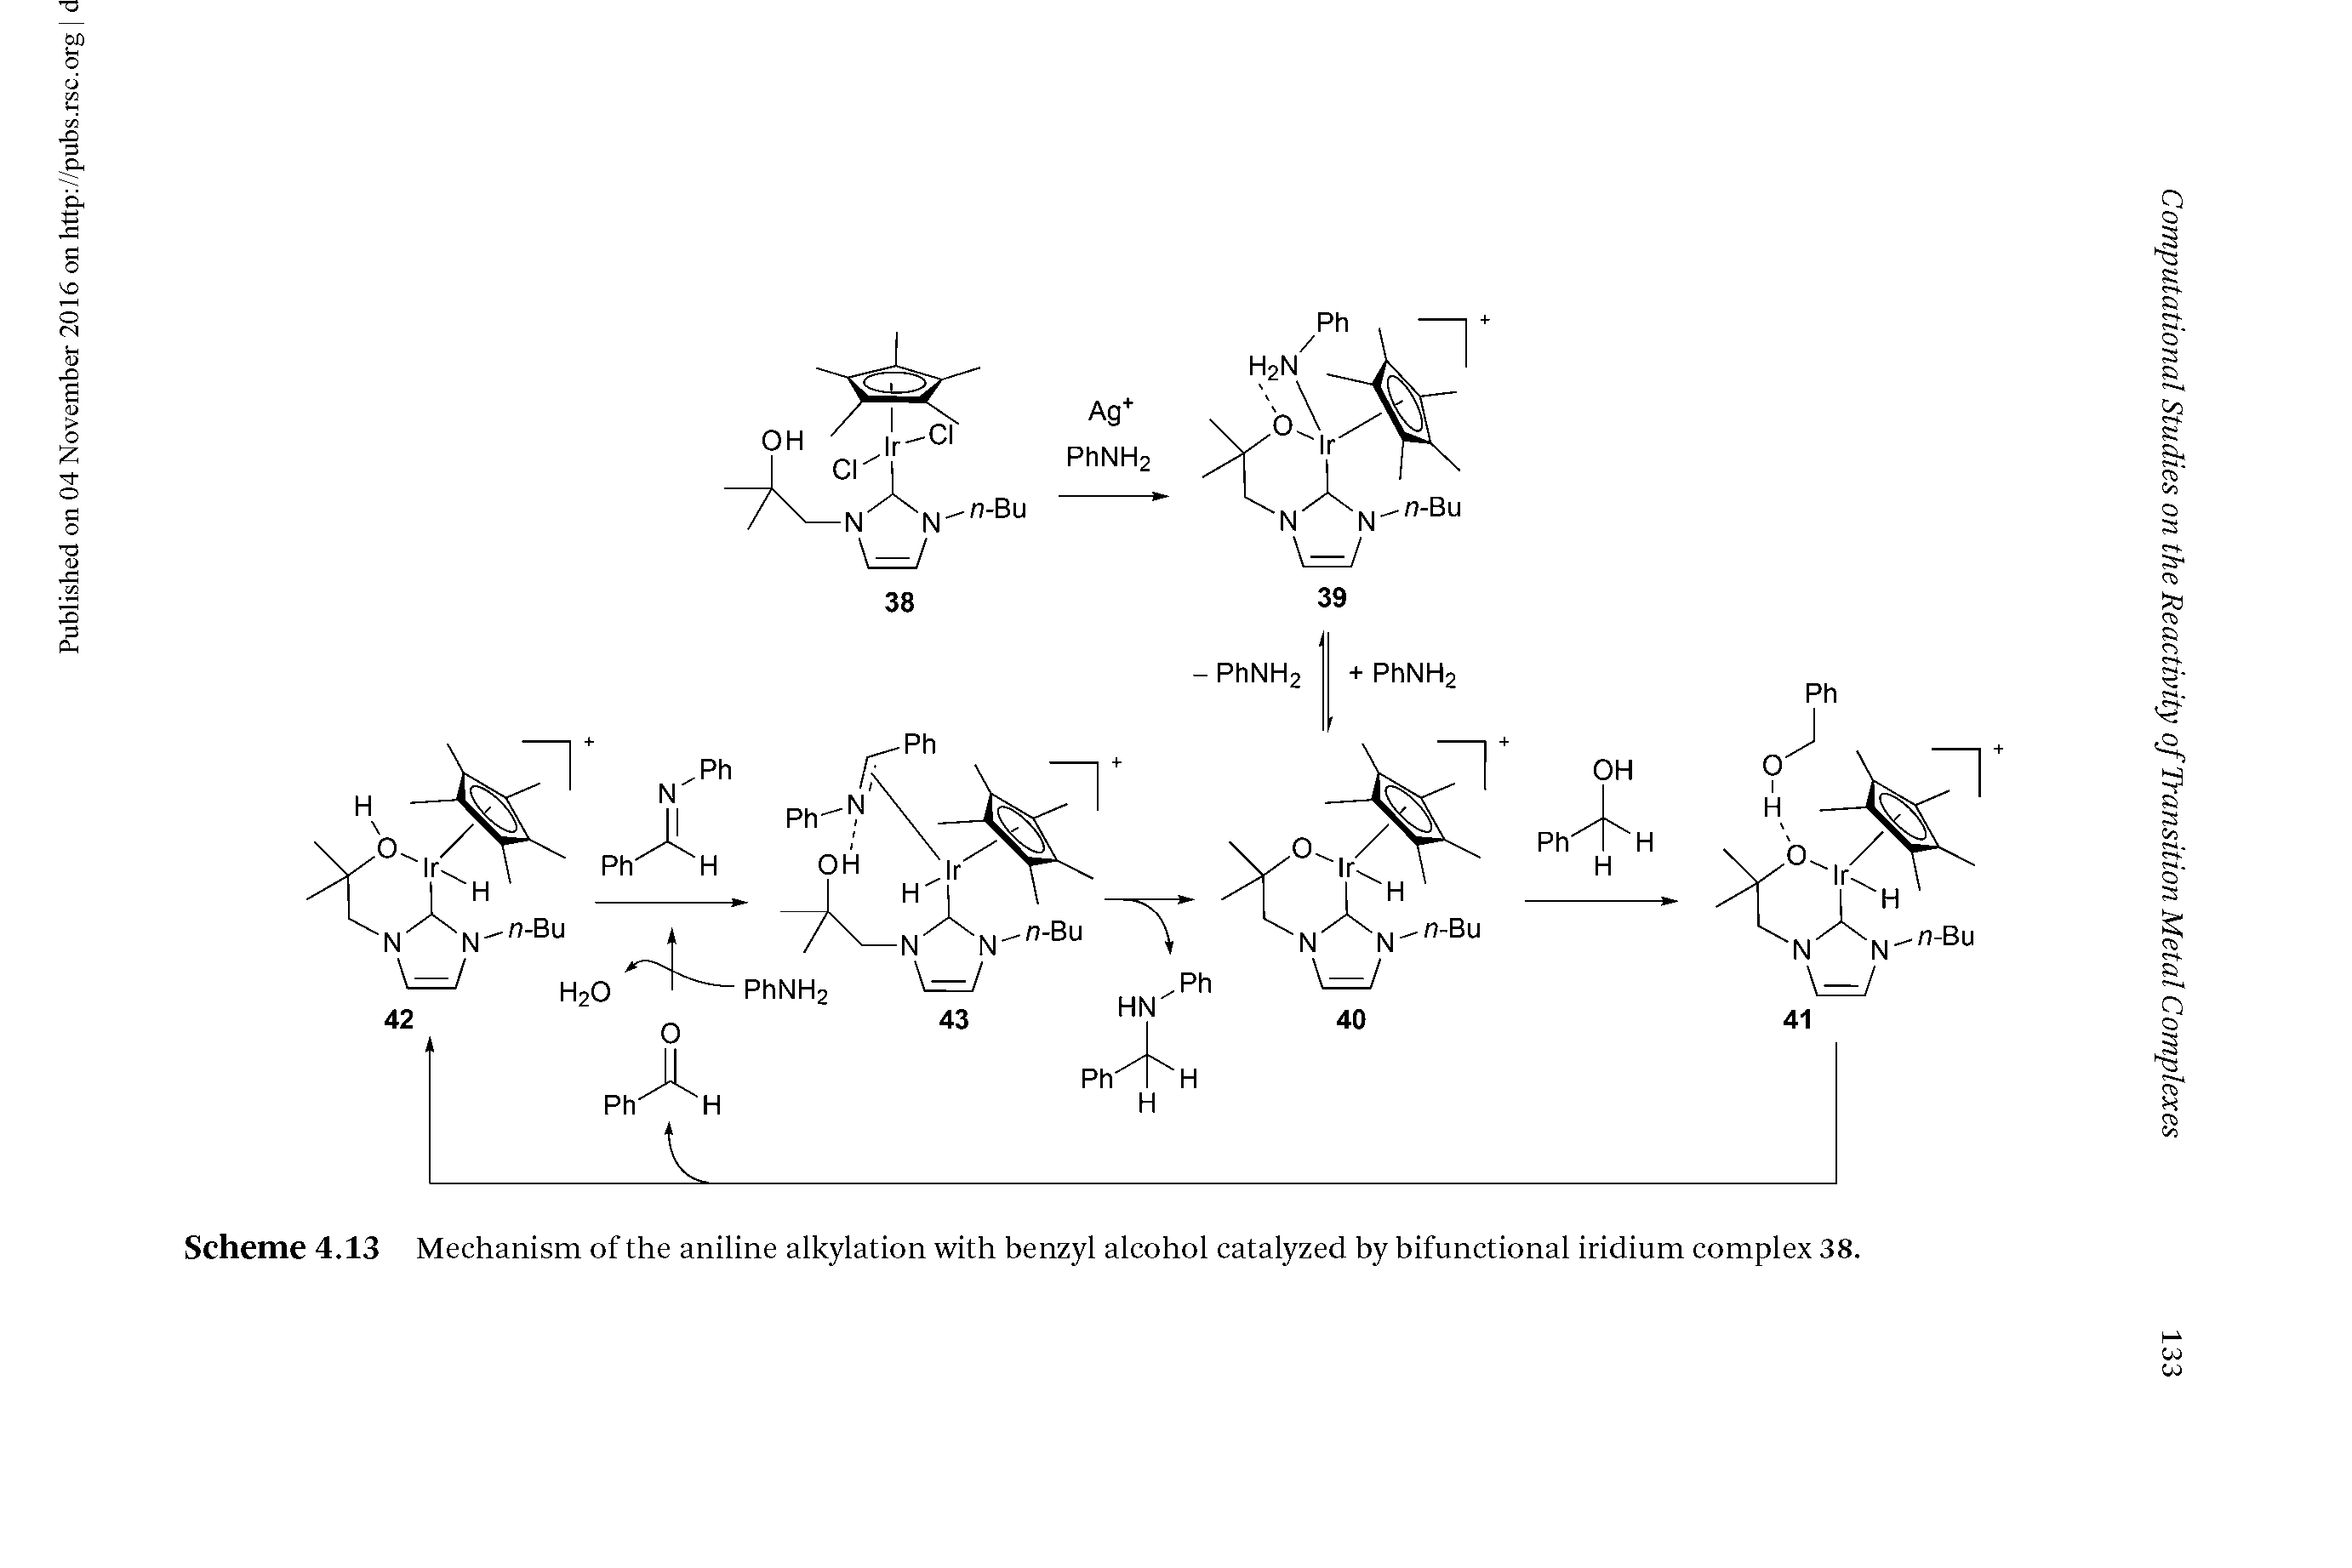 Scheme 4.13 Mechanism of the aniline alkylation with benzyl alcohol catalyzed by bifunctional iridium complex 38.